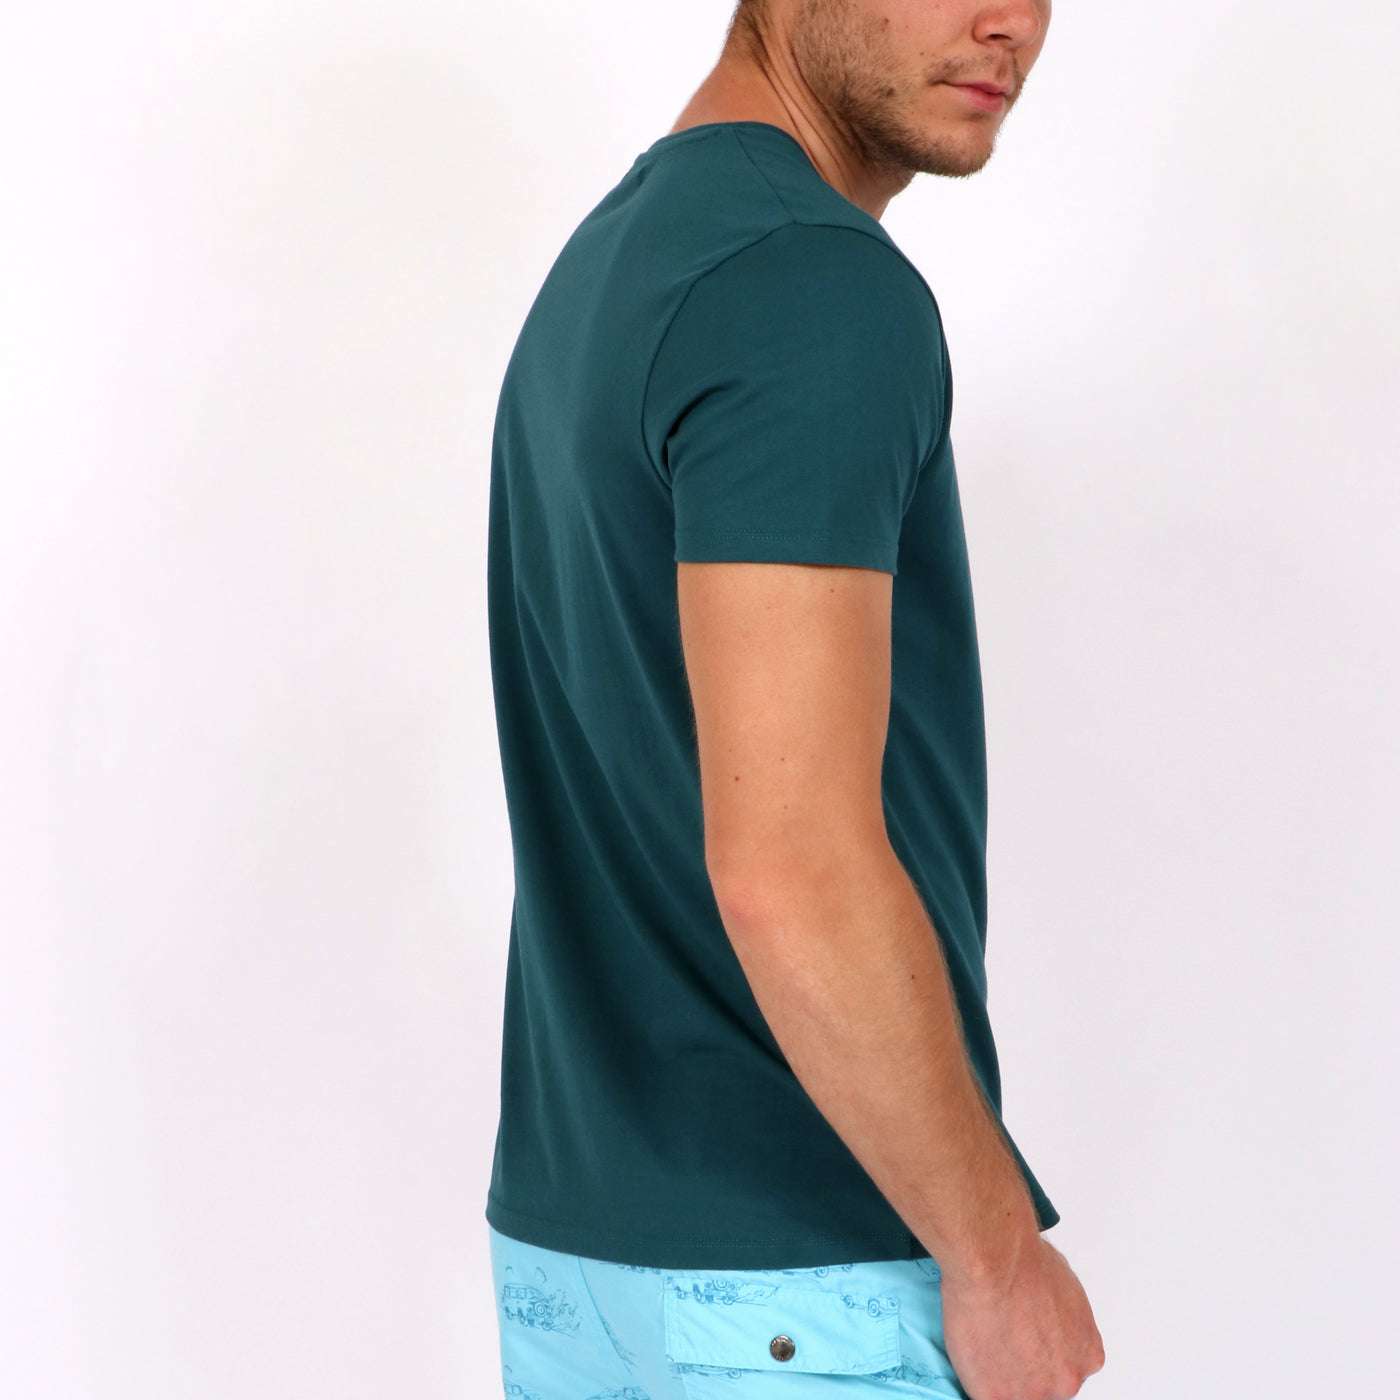 OWTS1802 Atlantic Green men's organic cotton t-shirt with logo print on body side view